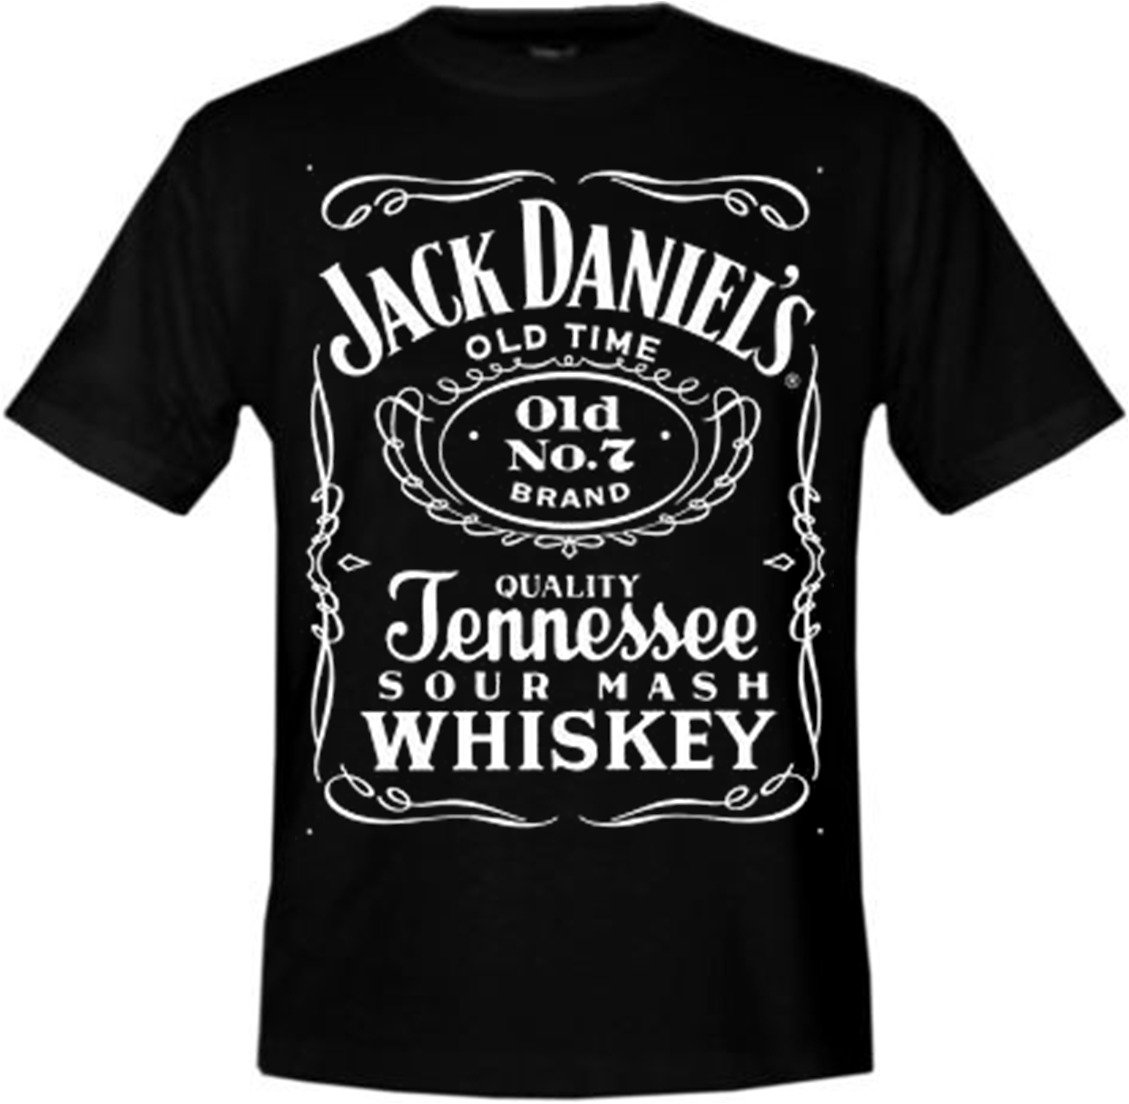 camisa-cartoon-whisky-jack-daniels_MLB-F-3196310537_092012